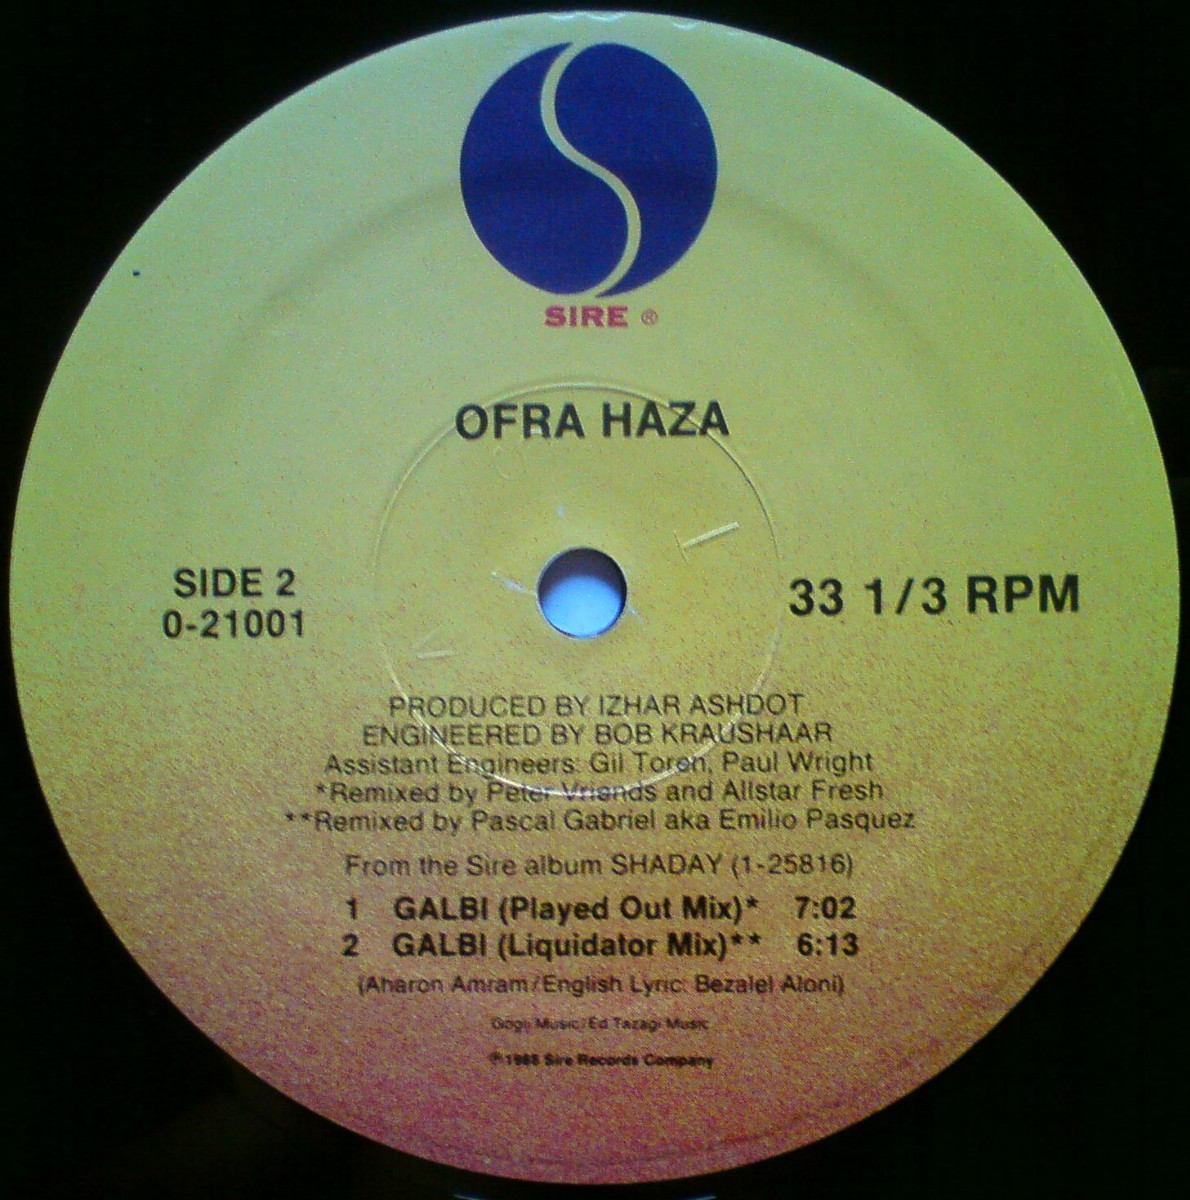 Ofra Haza Im Ninalu Mix Paula Abdul And Madonna Mdna 90s 599 99